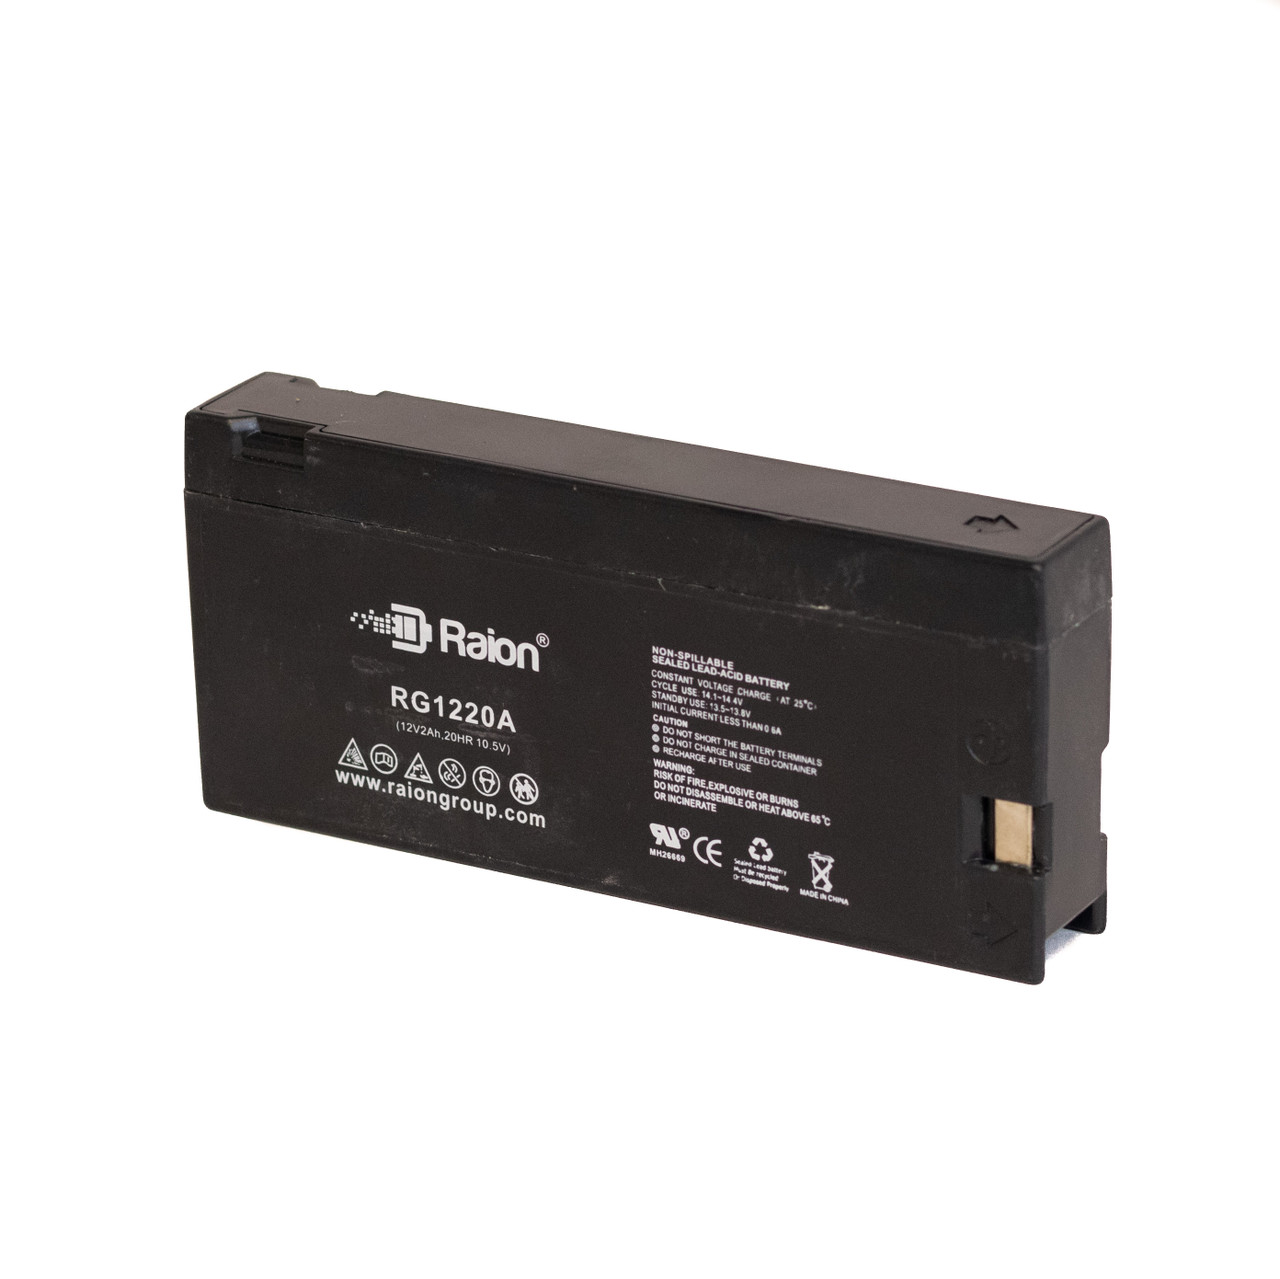 Raion Power RG1220A Replacement Battery for Magnavox CVR-325